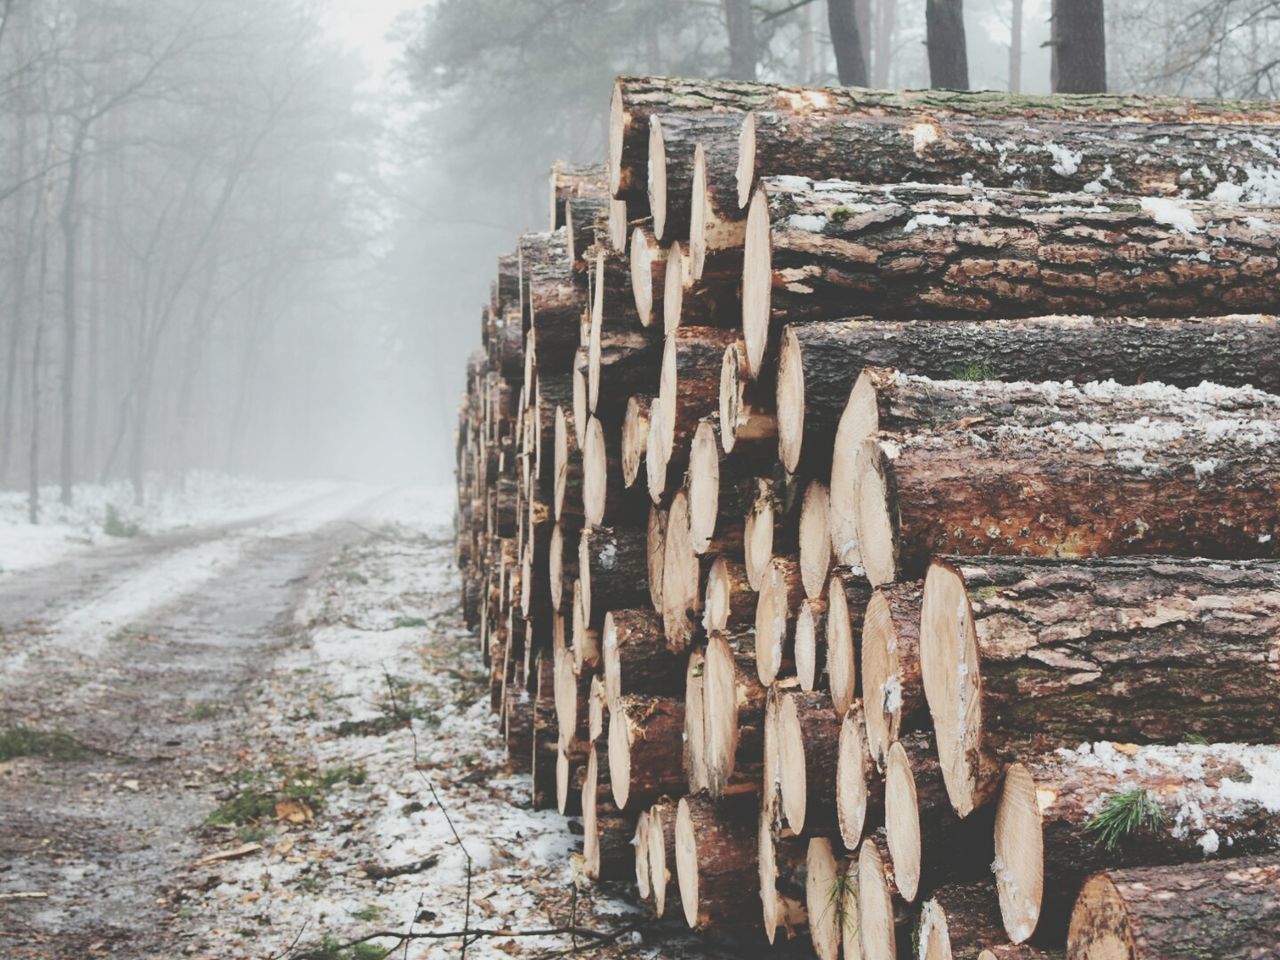 Logs during snowfall